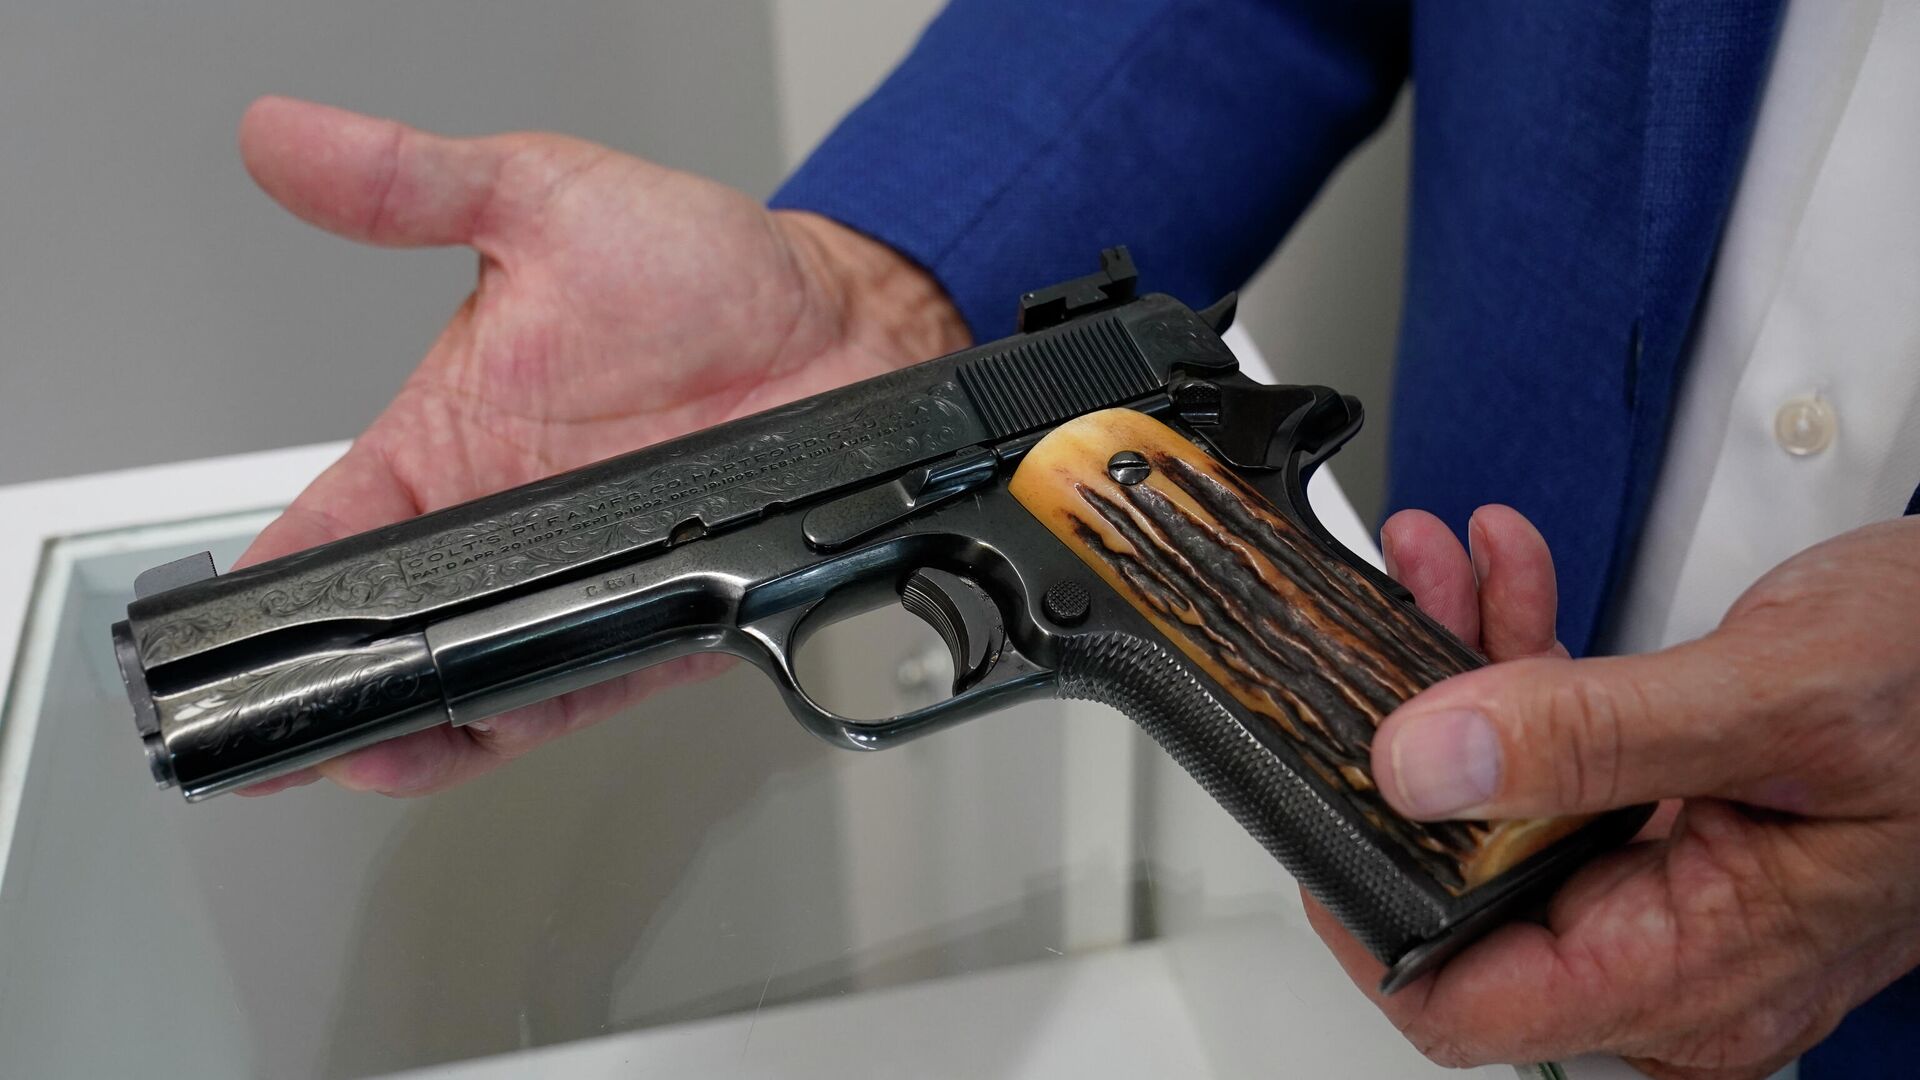 Pistola Colt calibre .45 de Al Capone - Sputnik Mundo, 1920, 27.08.2021